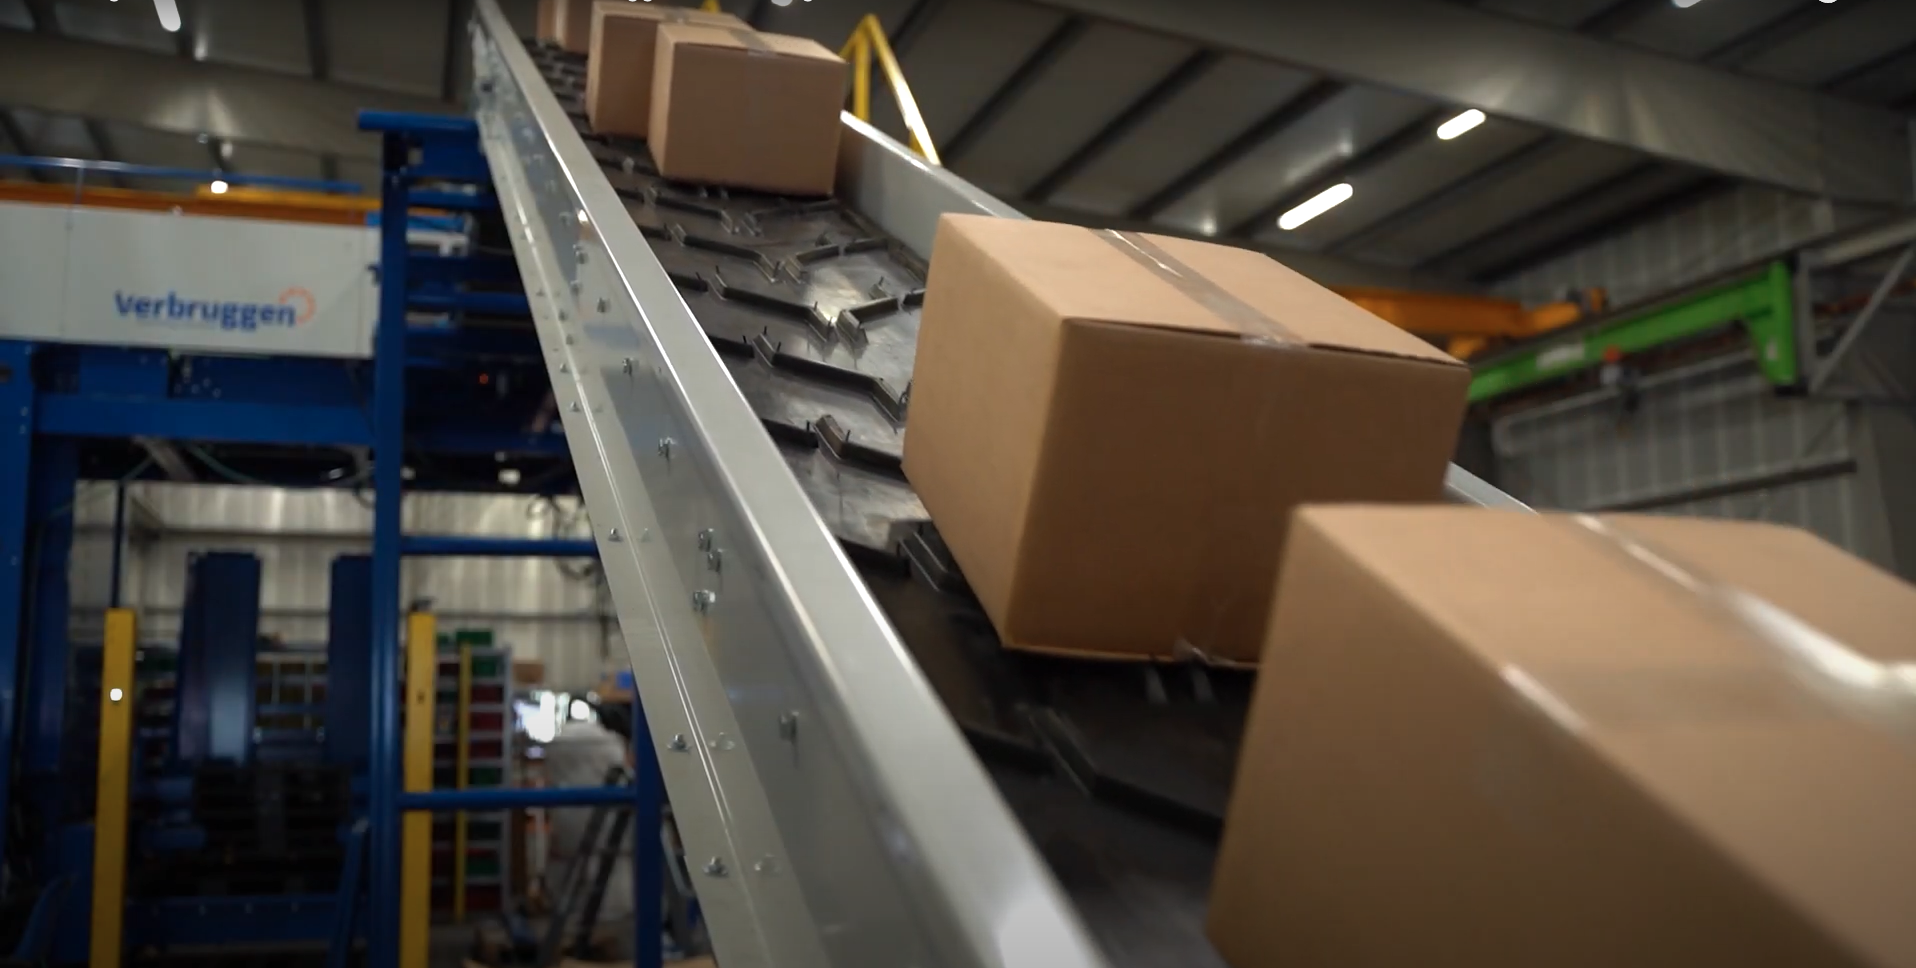 Conveyor belt transporting boxes